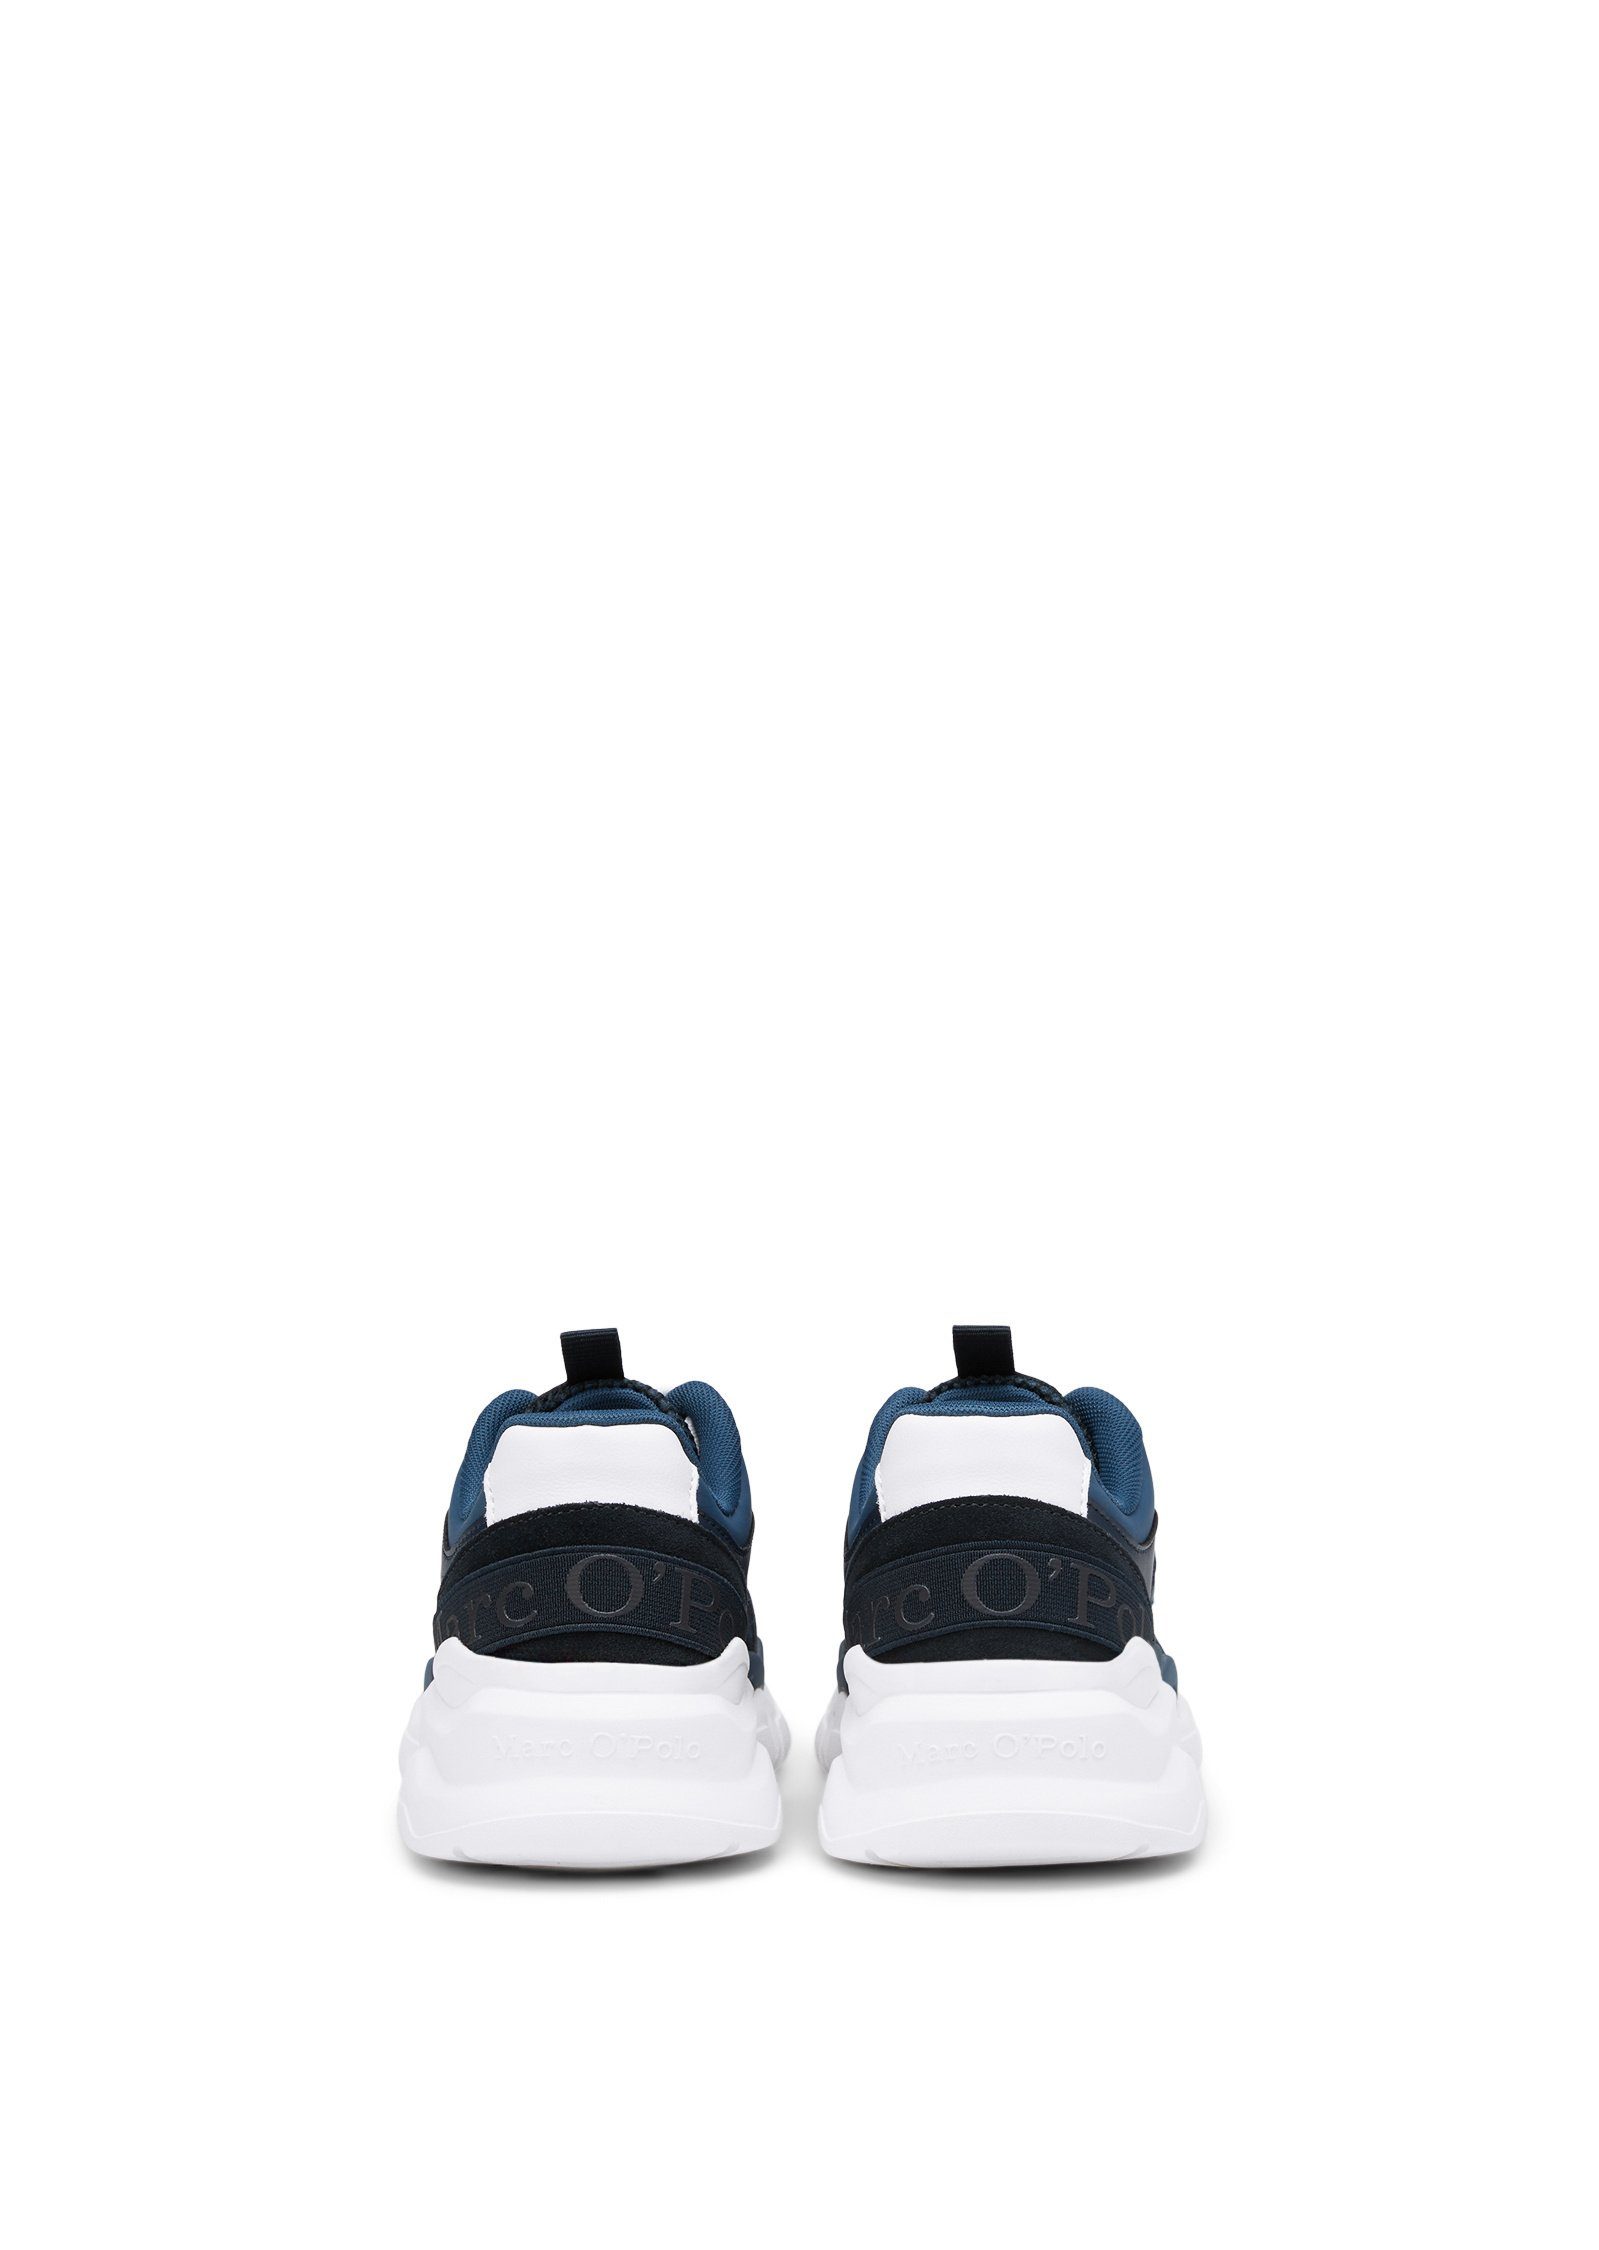 O'Polo Marc Sneaker recycelter blau Leder-Textil-Kombination aus